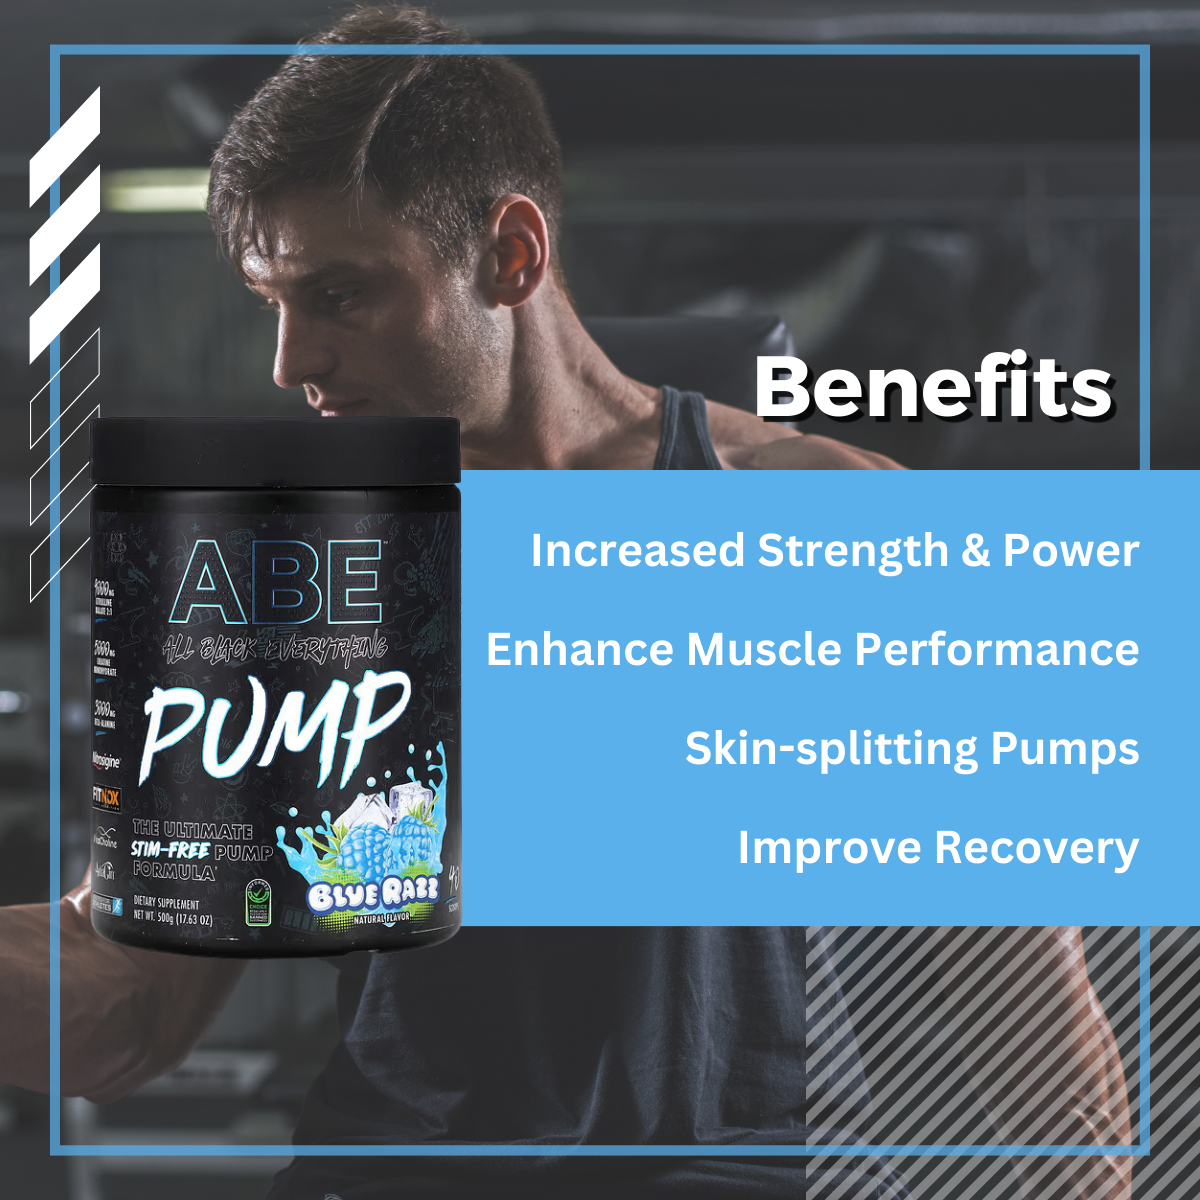 ABE, Pump, Stim-Free Pre Workout Powder, Various Flavor, 17.63 oz (500 g), Benefits